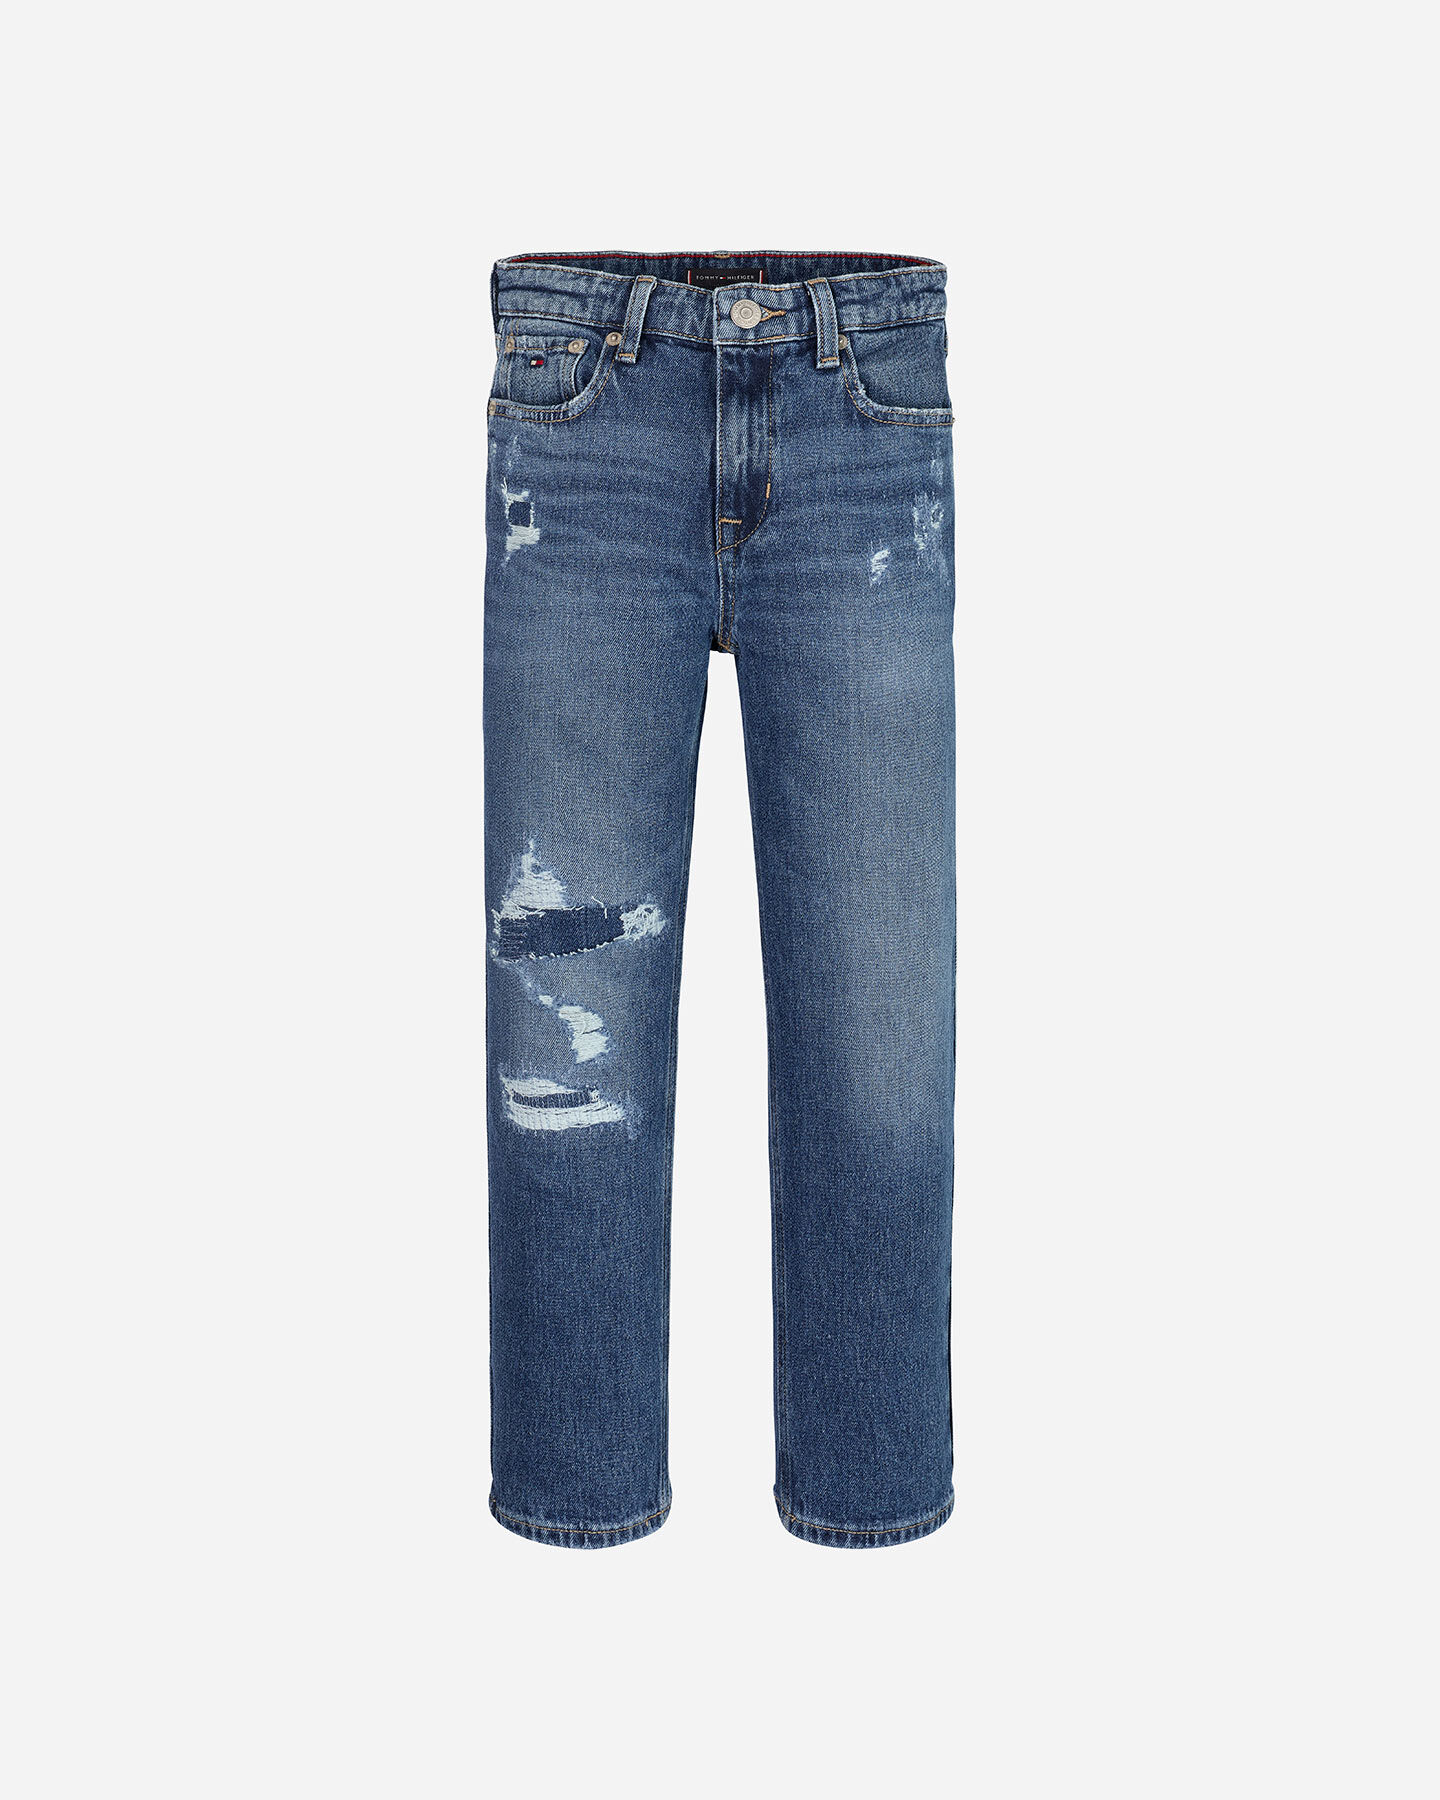  Jeans TOMMY HILFIGER SKATER ROTTUREID JR S4126707|1A5|14A scatto 0